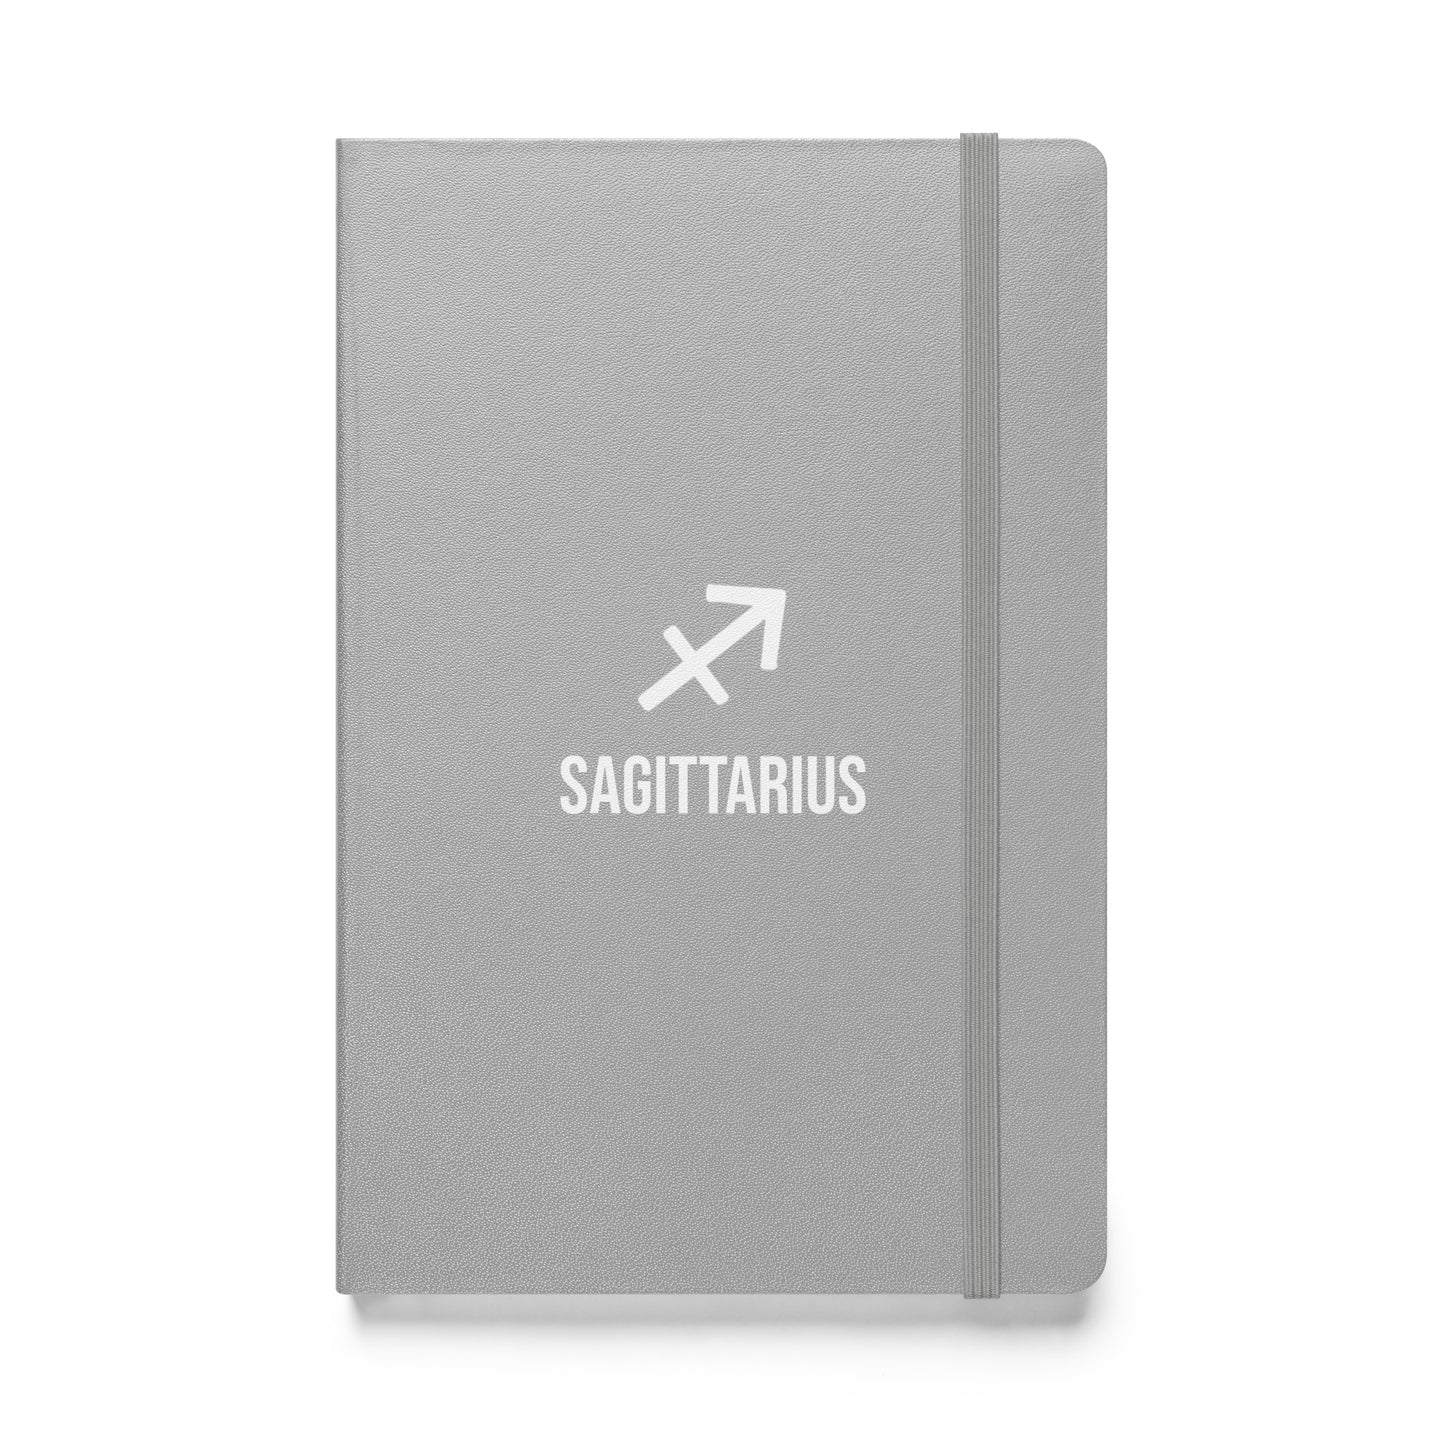 Sagittarius Hardcover Notebook